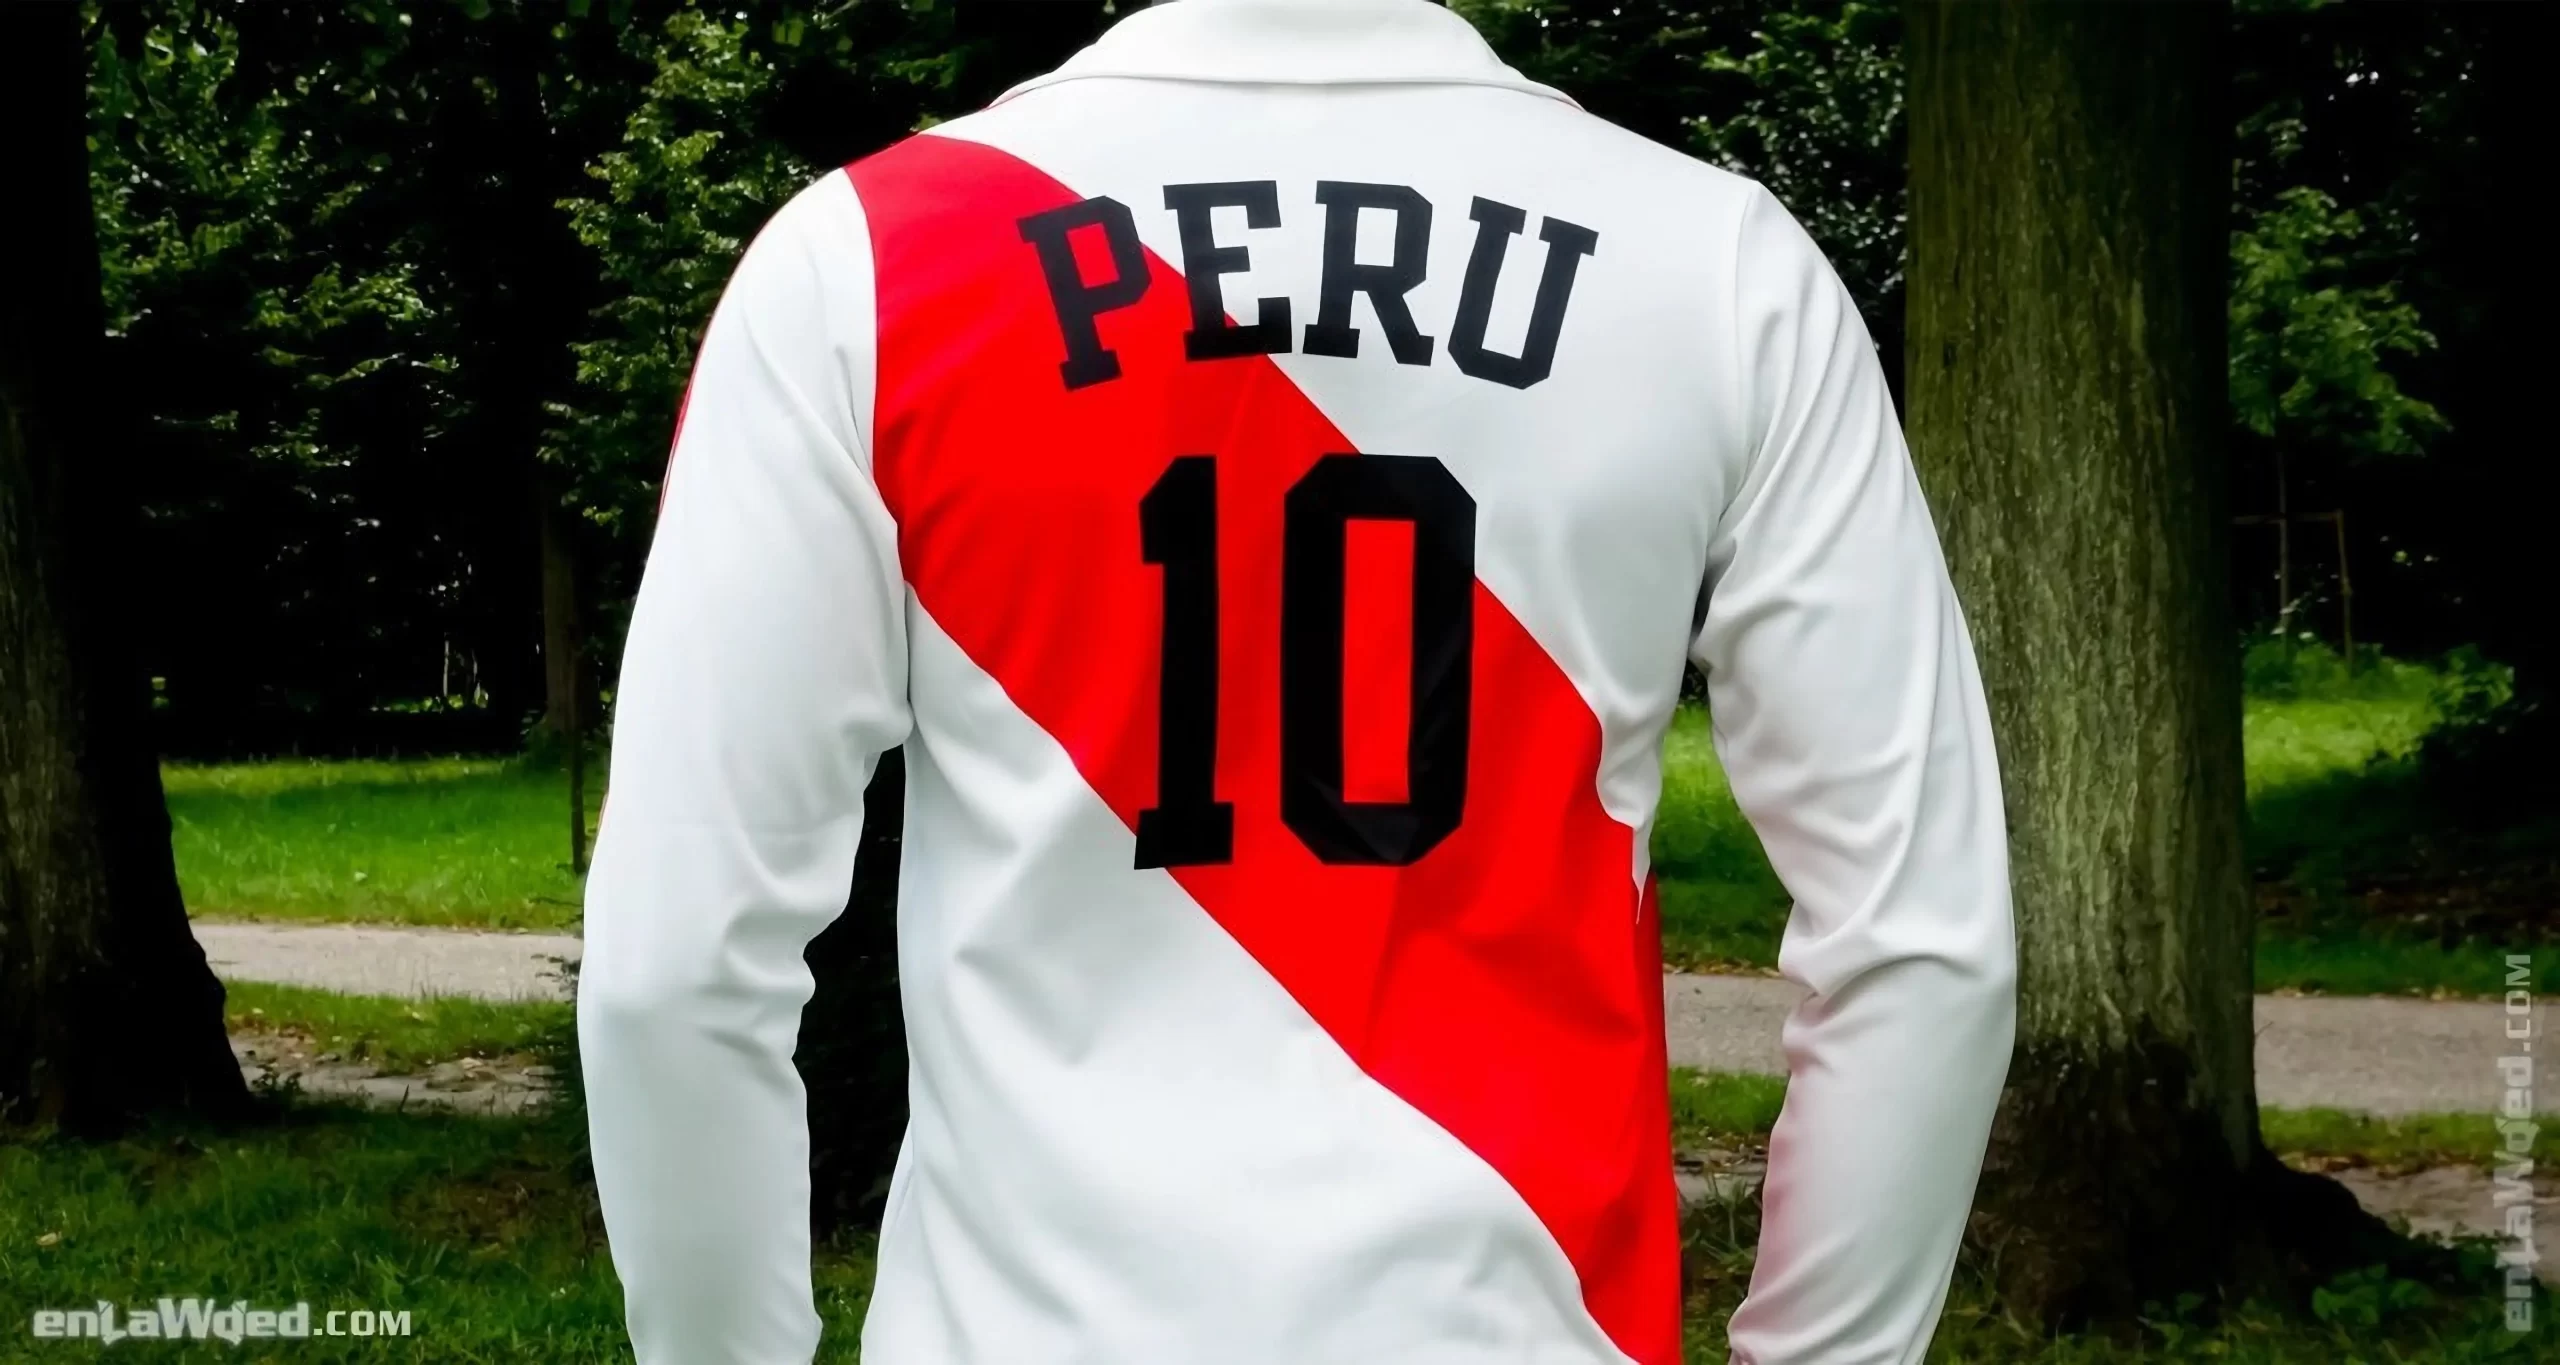 Men’s 2005 Peru ’78 Cubillas LS by Adidas Originals: Defiance (EnLawded.com file #lmc4m888ldxxddaose9)